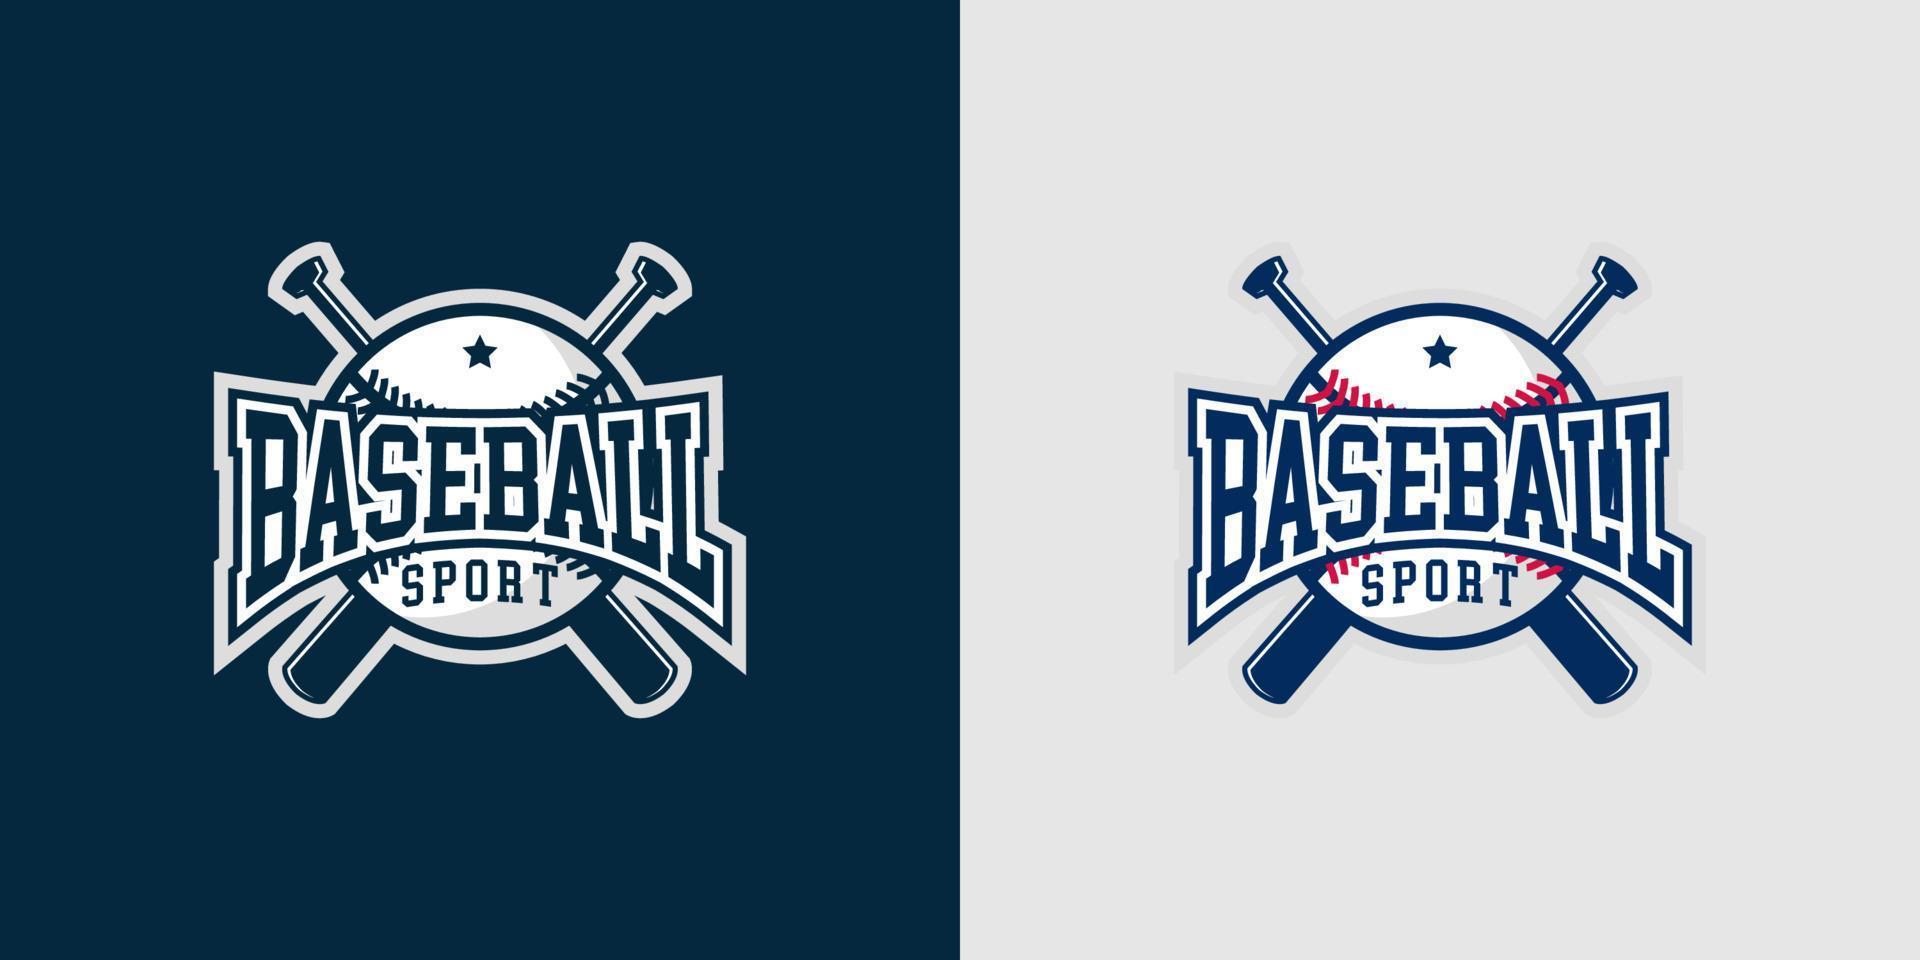 Baseball logotype template. Modern logo and symbol of sport. Bat stick and helmet concept. Vector eps 10.